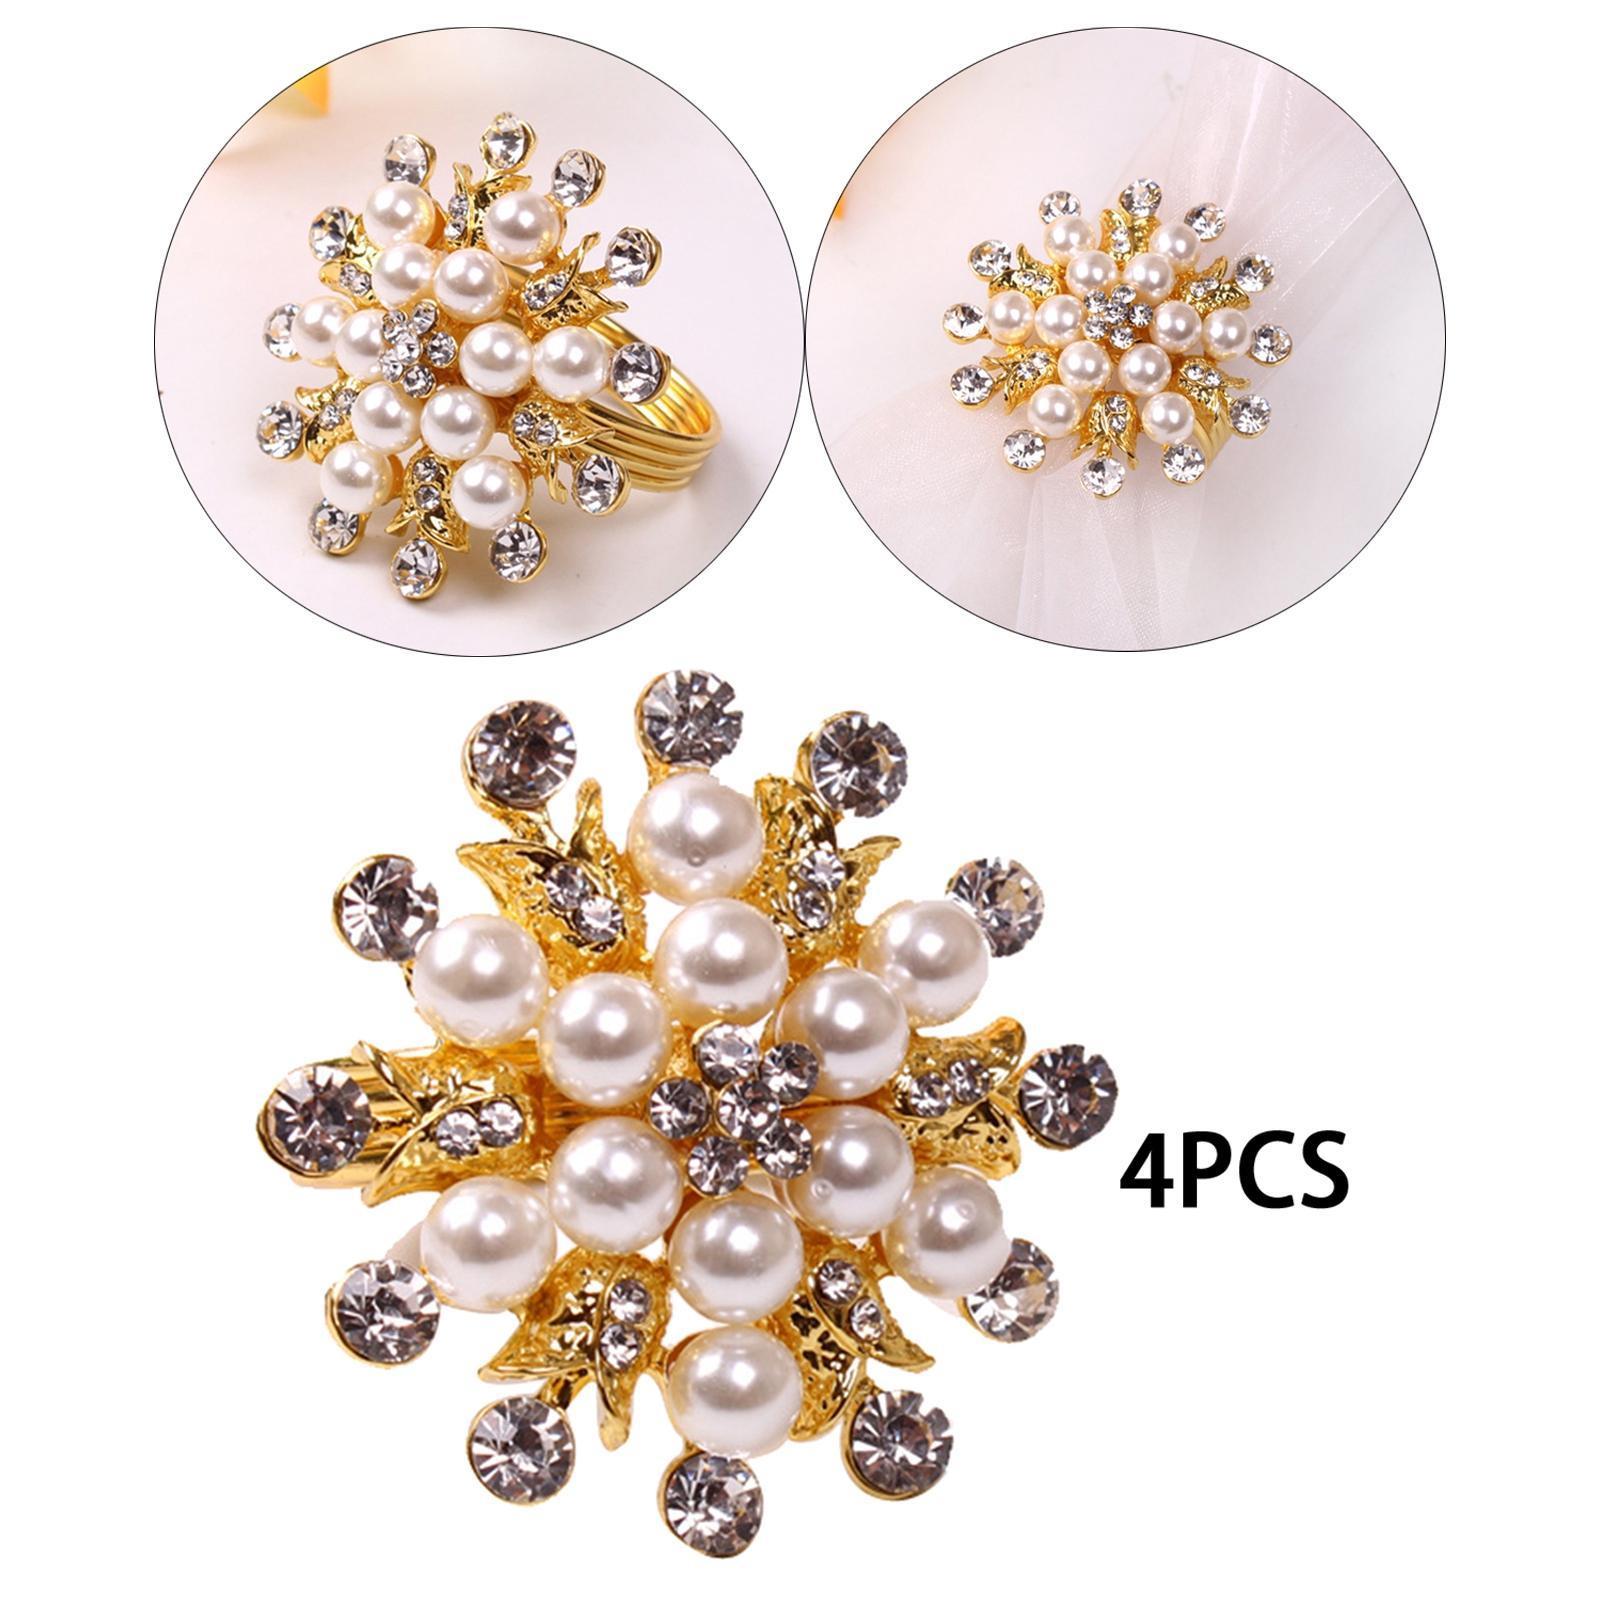 4 Pieces Napkin Rings Set Snowflake Table Decor Diamond Floral for Christmas